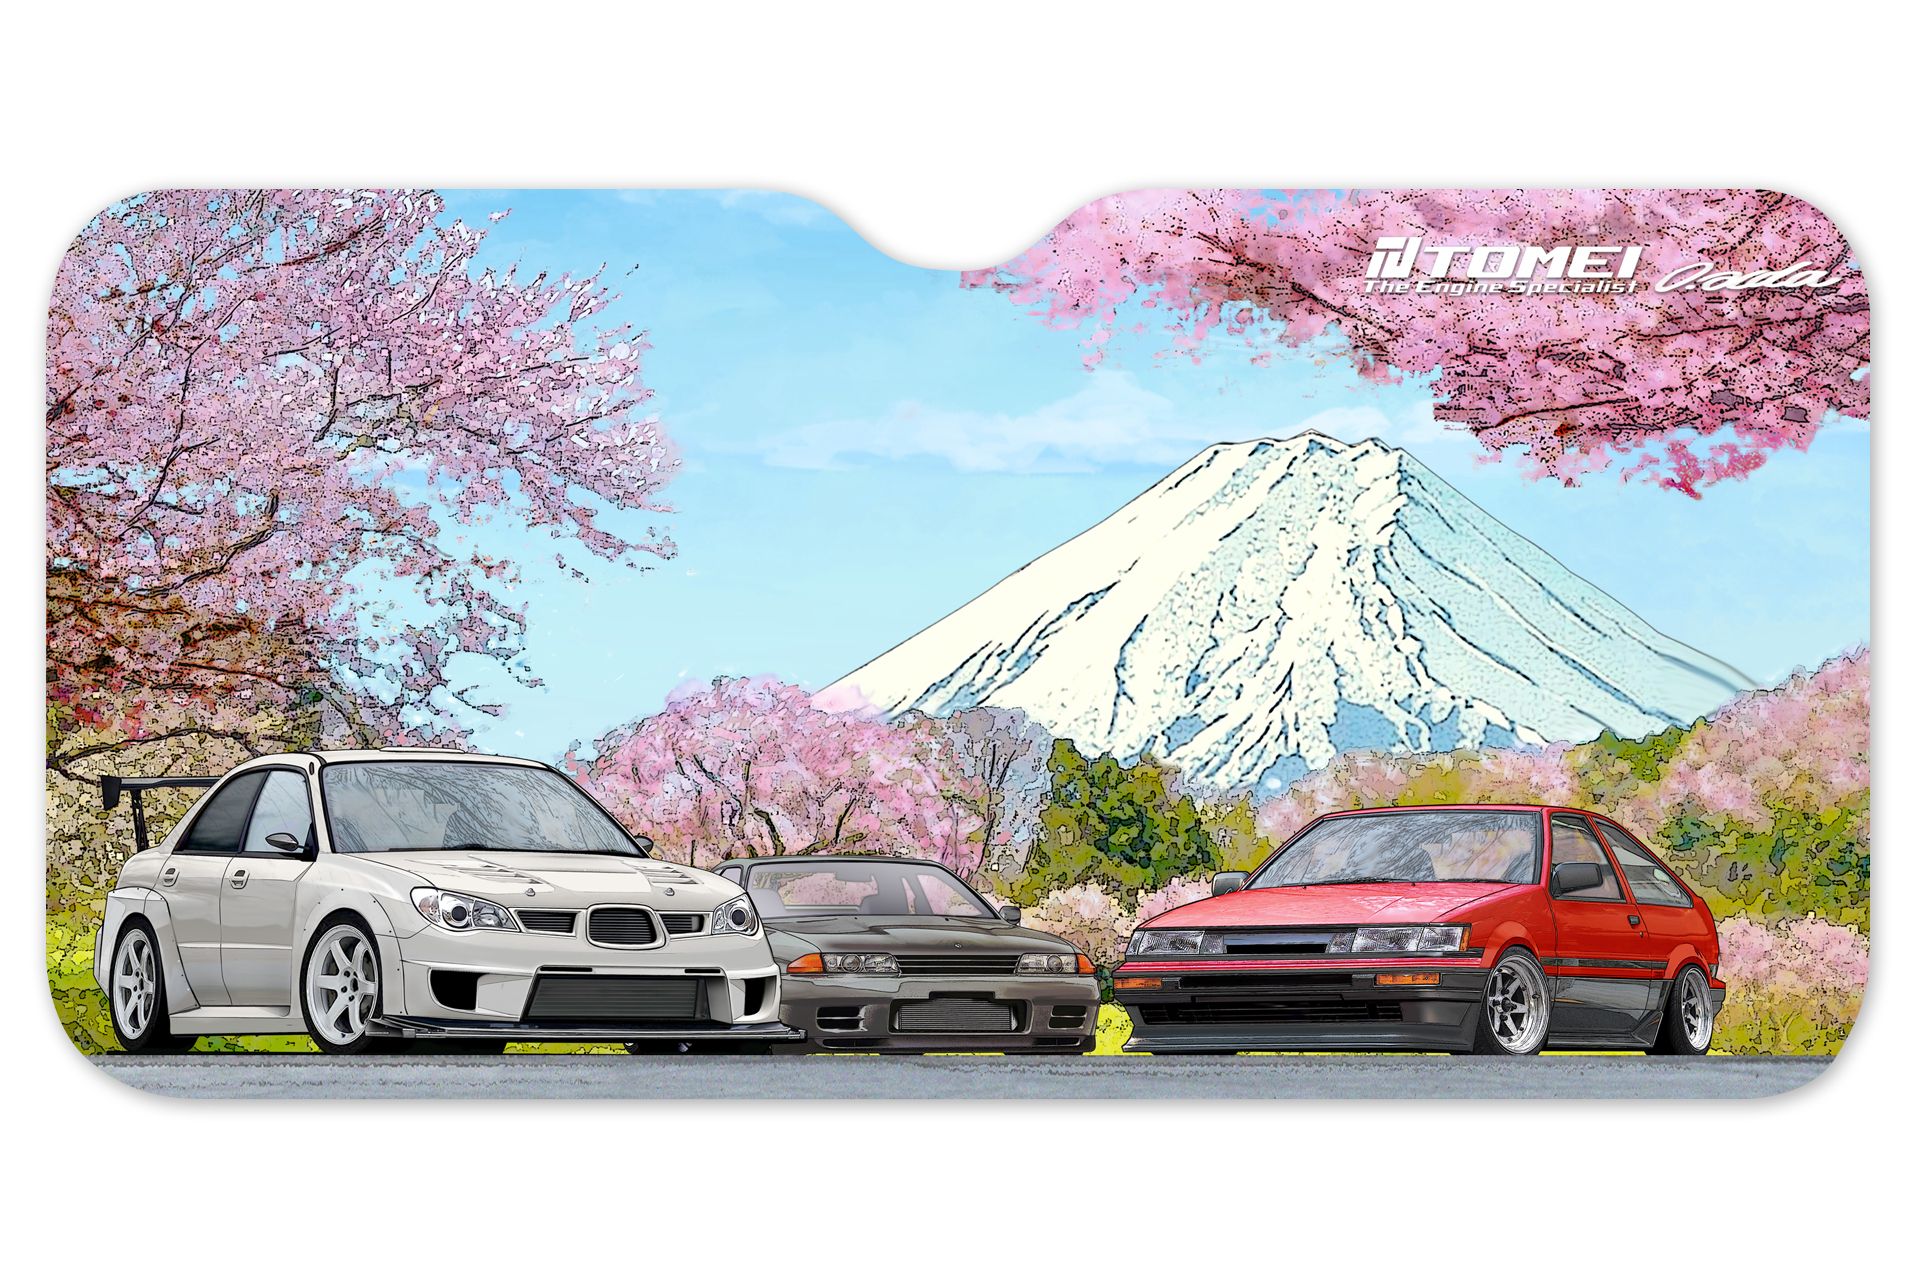 Tomei Sun Shade 59x28 GDB/BNR32/AE86 Cherry Blossom Mt. Fuji